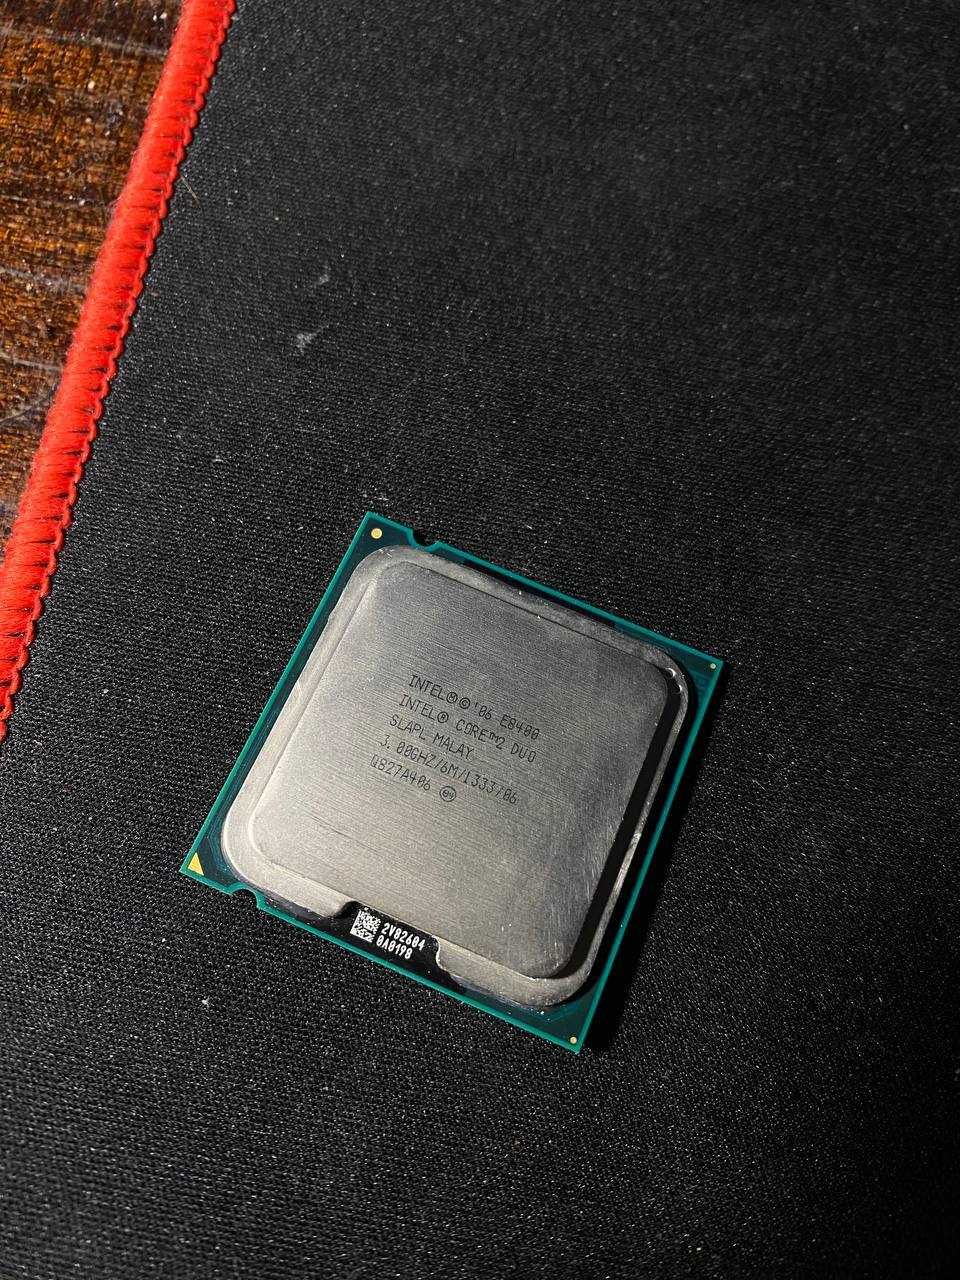 Процесор Intel Core 2 Duo E8400 3.0 GHz / 6 MB / 1333MHz (SLB9J) s775